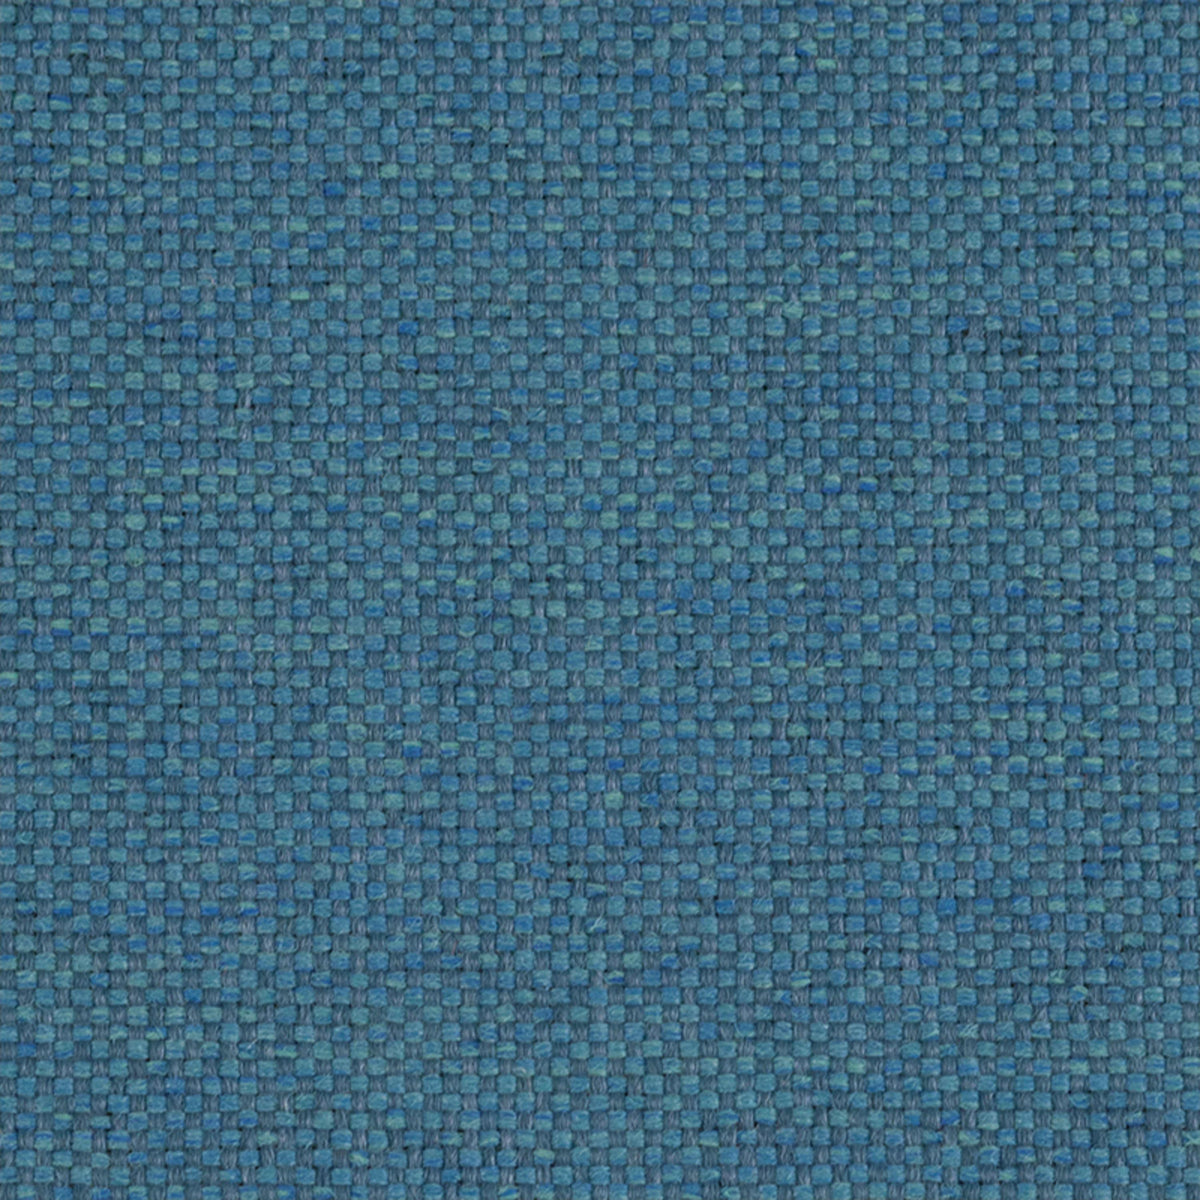 Shire Spa Blue Fabric |#| 